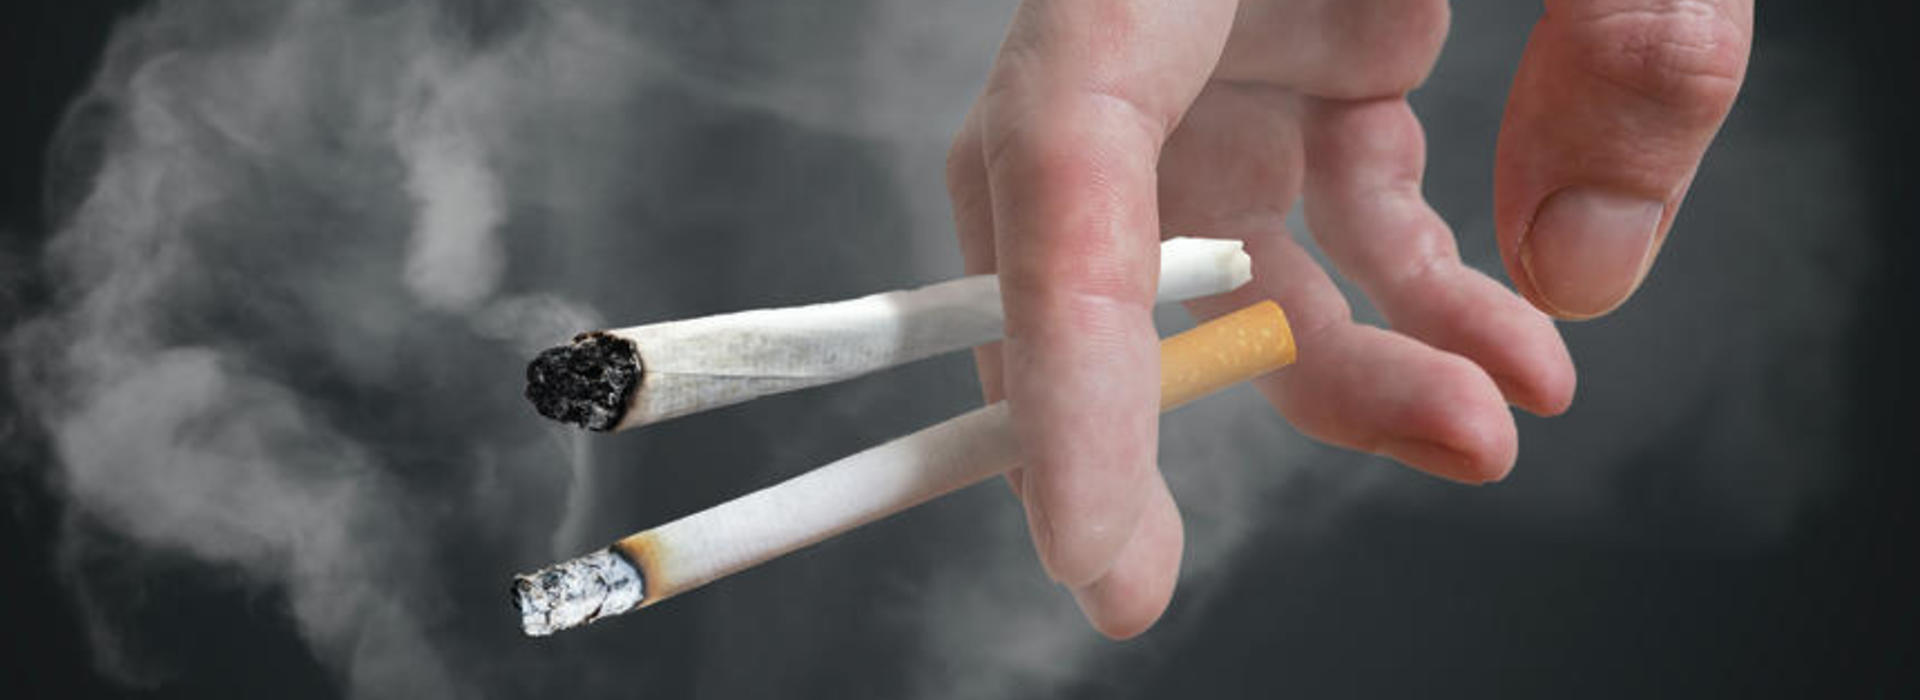 Man (smoker) is holding cigarette in hand on black background. Smoke around.